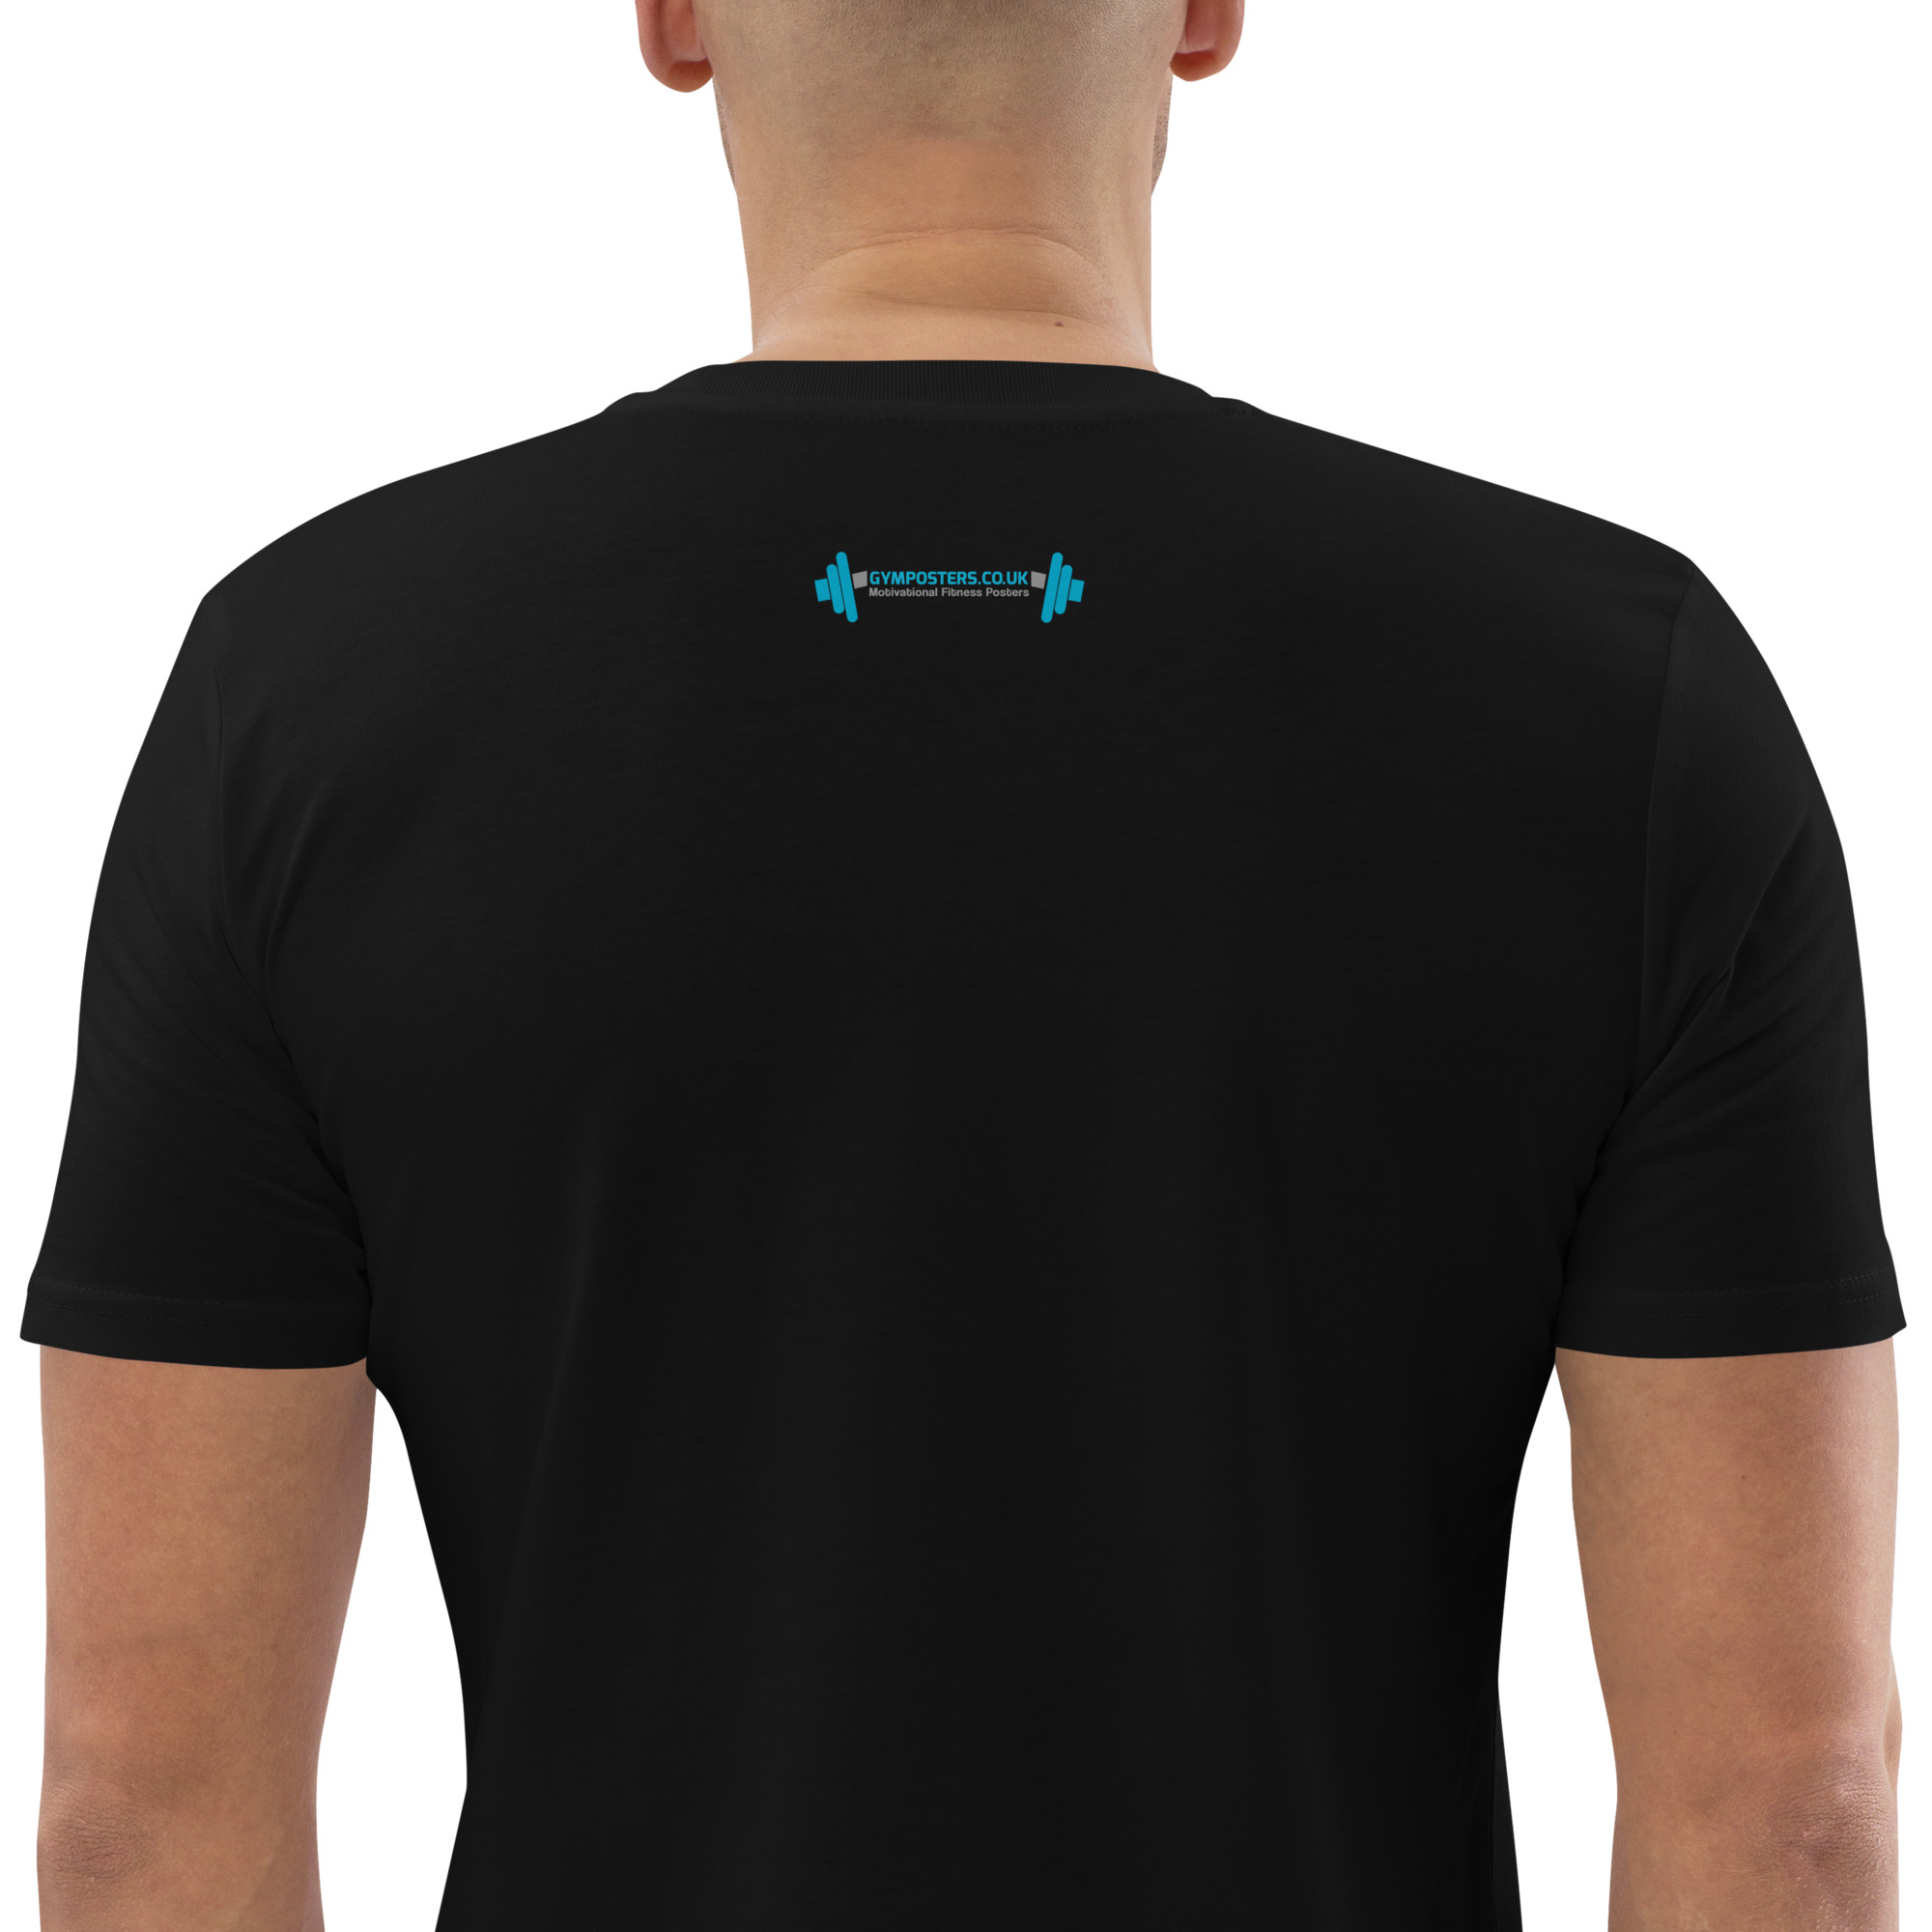 unisex-organic-cotton-t-shirt-black-zoomed-in-2-6578689f2a5c6.jpg